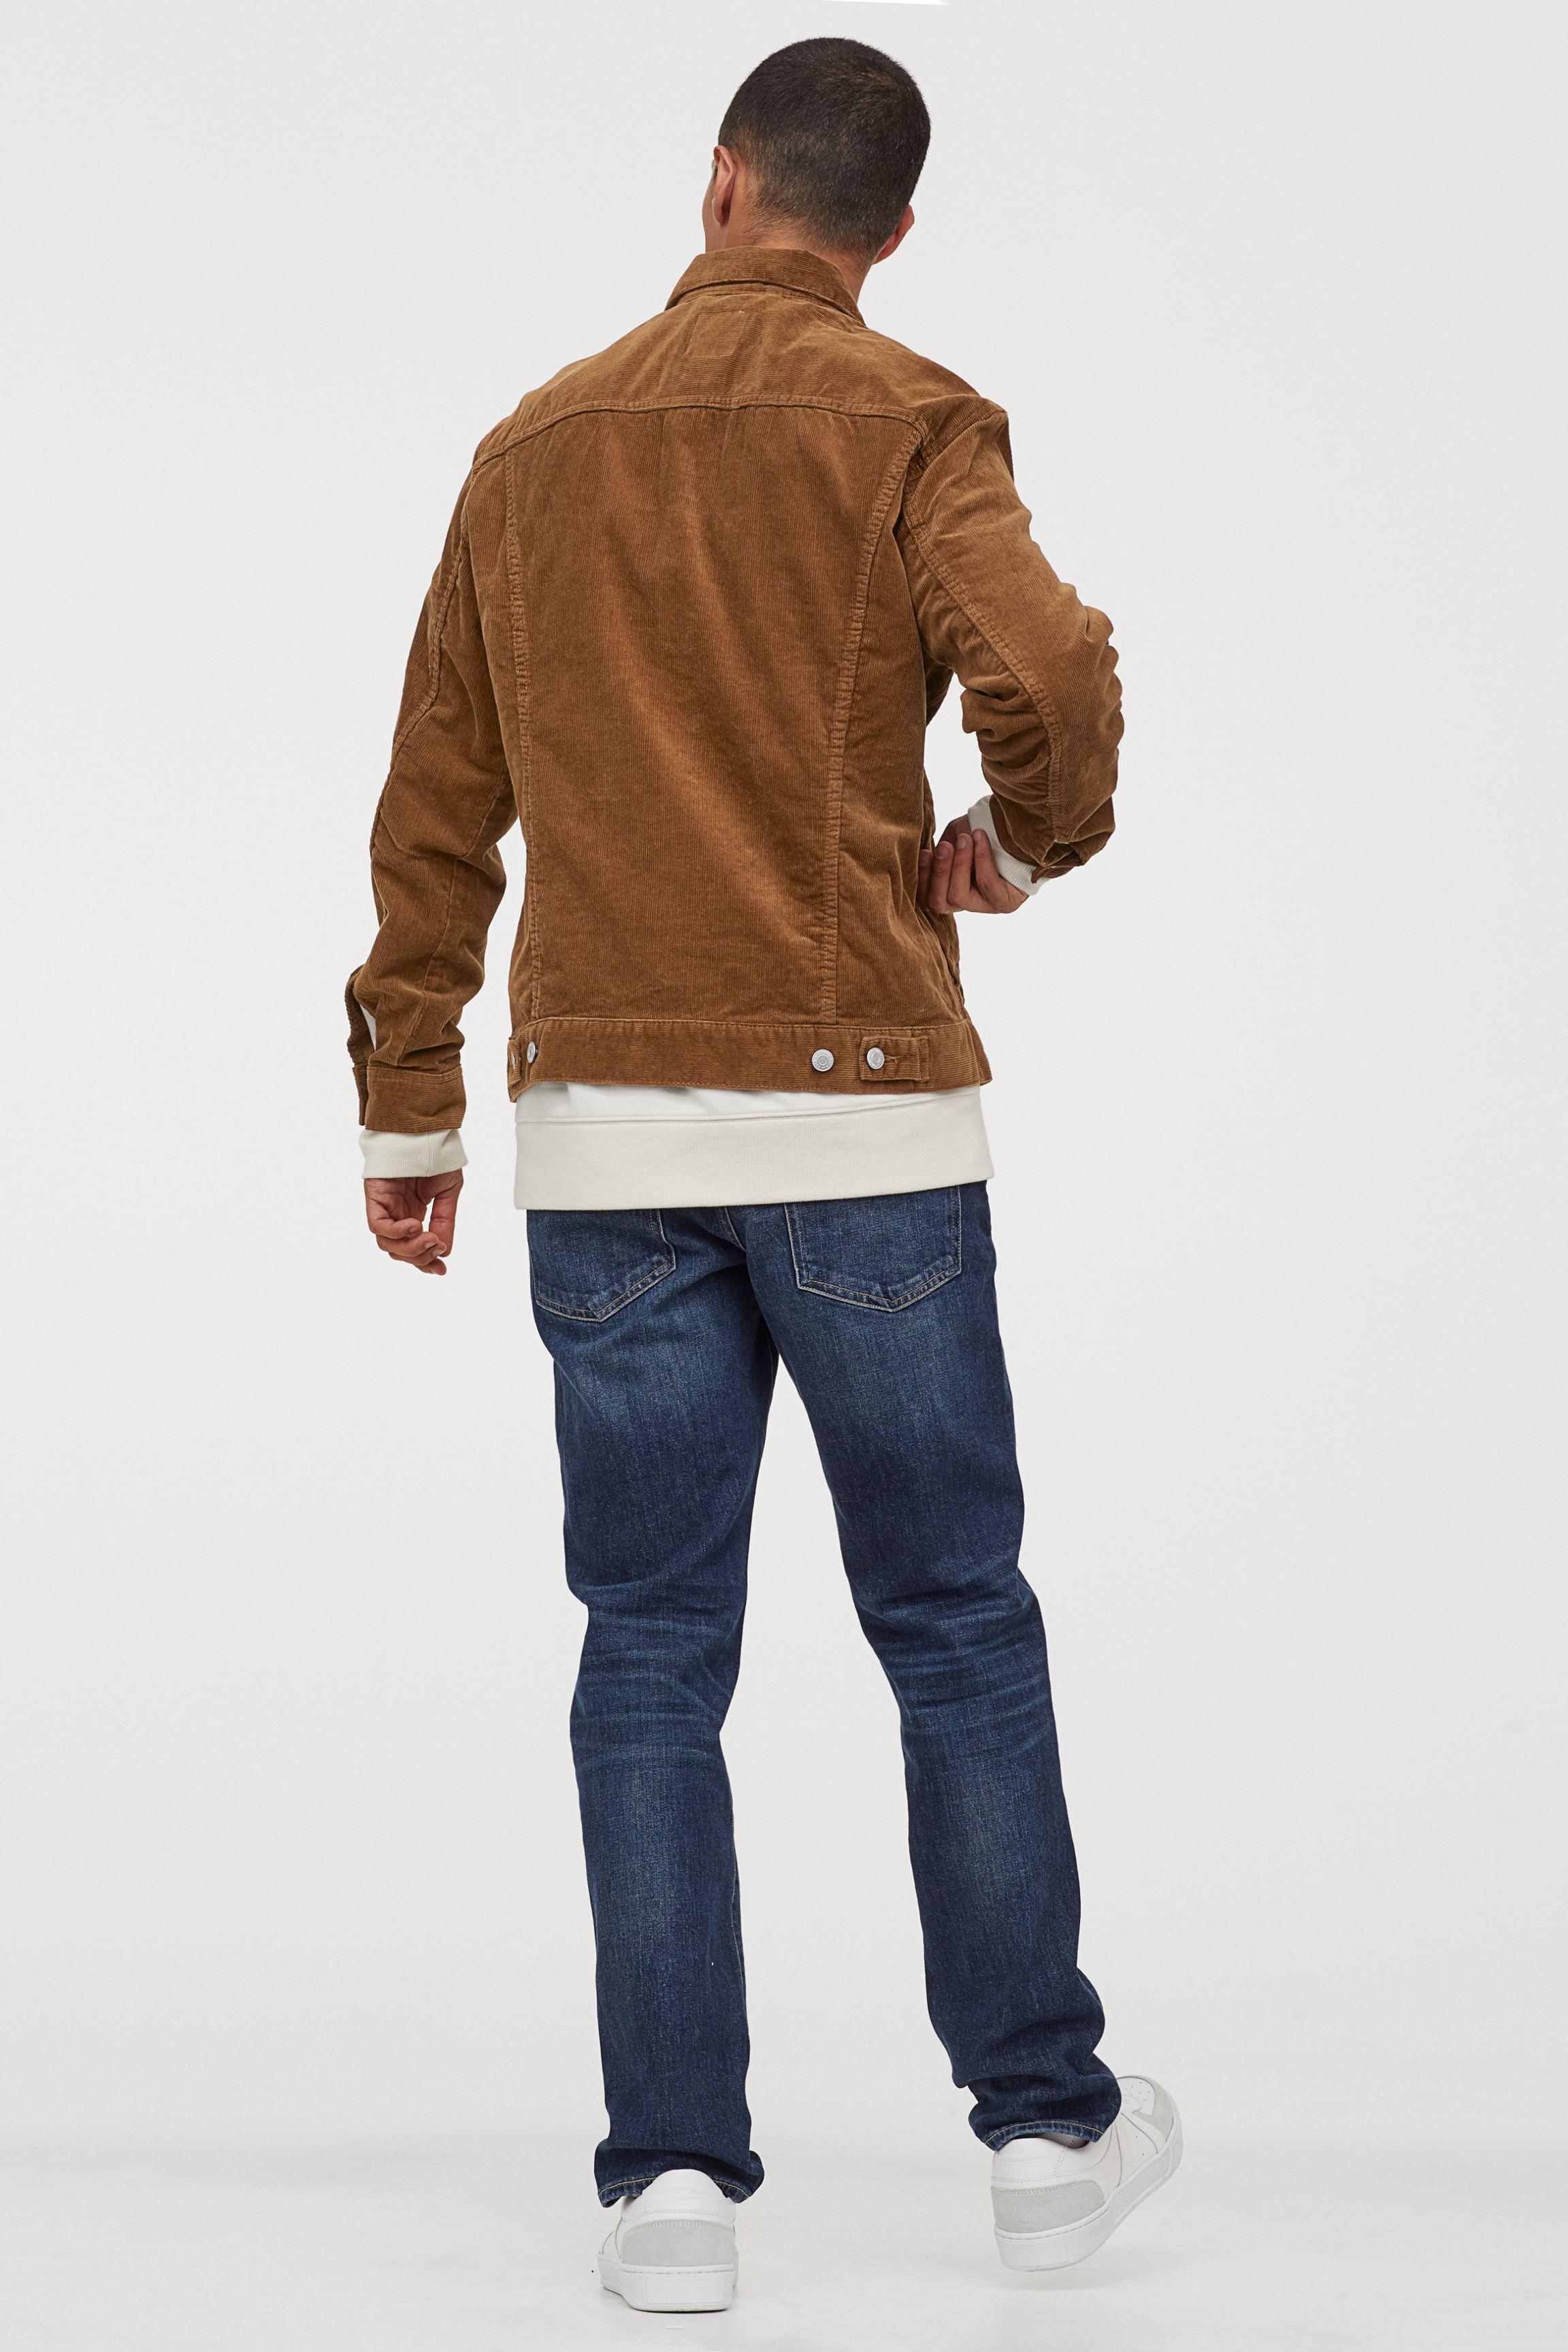 H&M Corduroy Jacket in Light Brown (Brown) for Men - Lyst